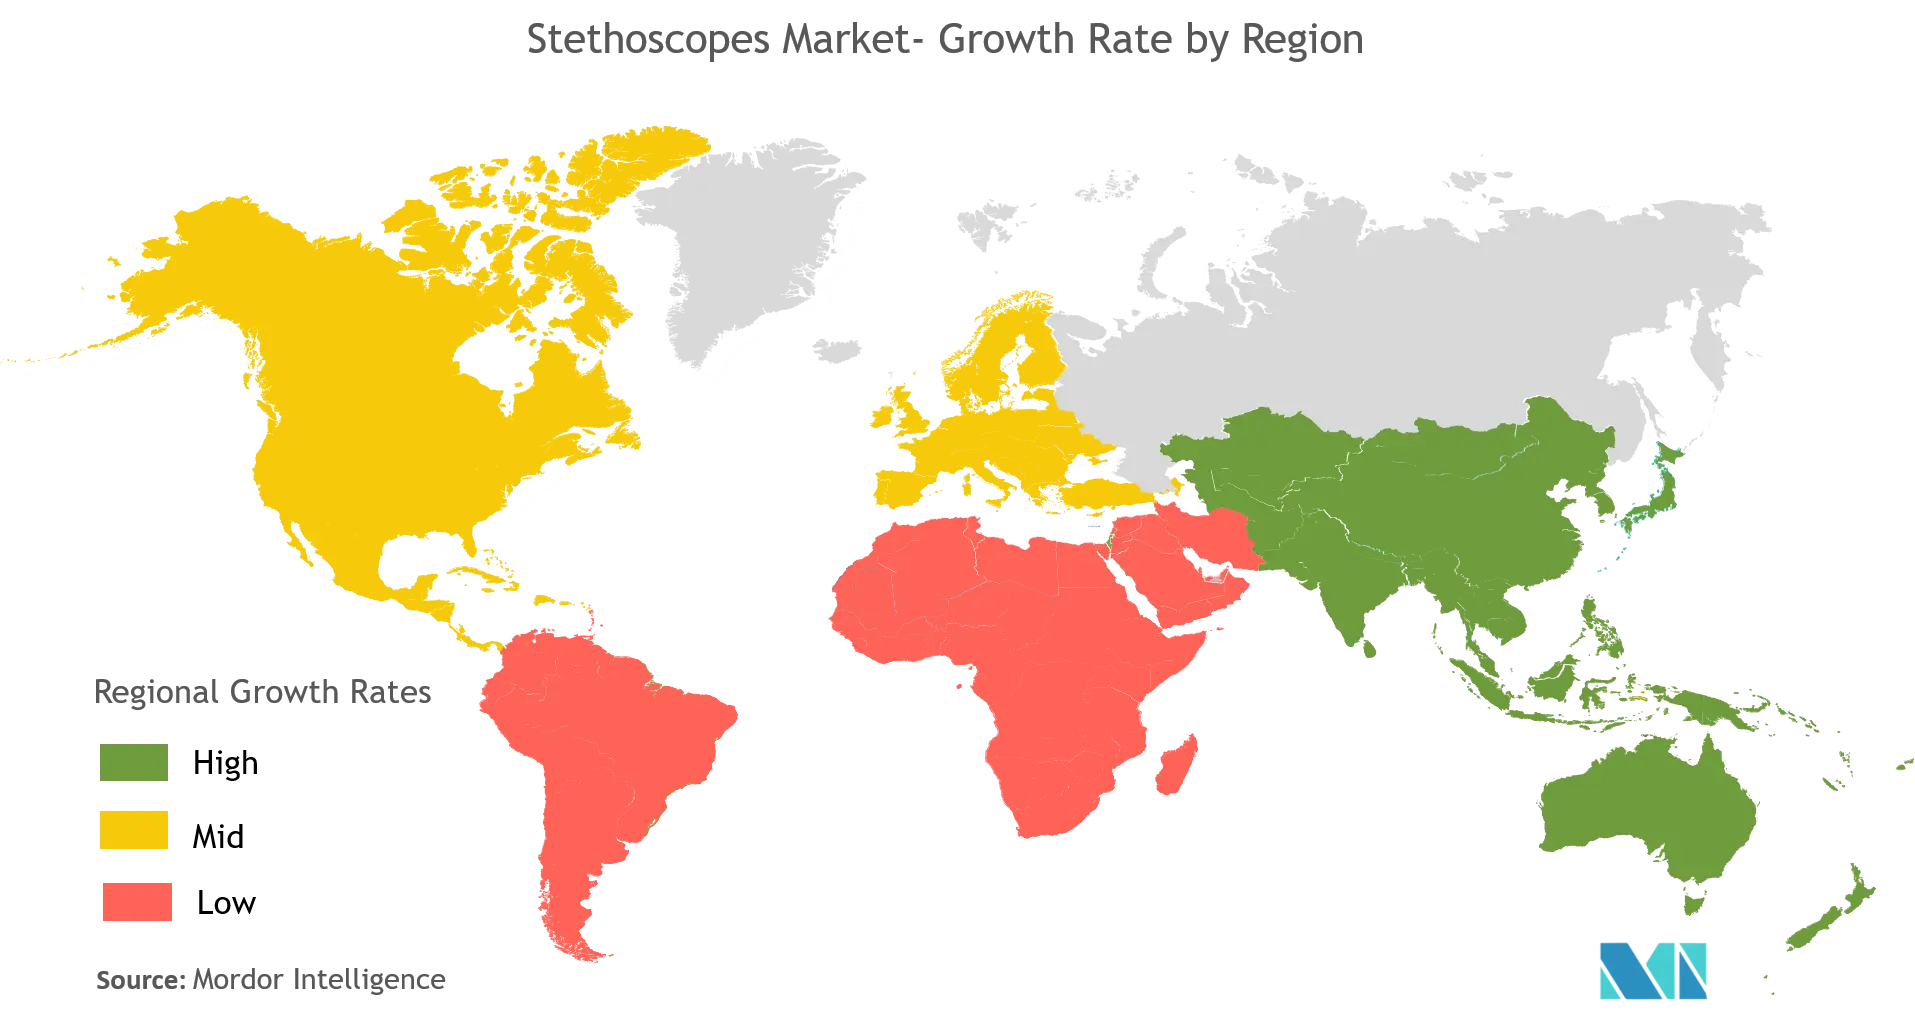  Stethoscope market Growth by Region